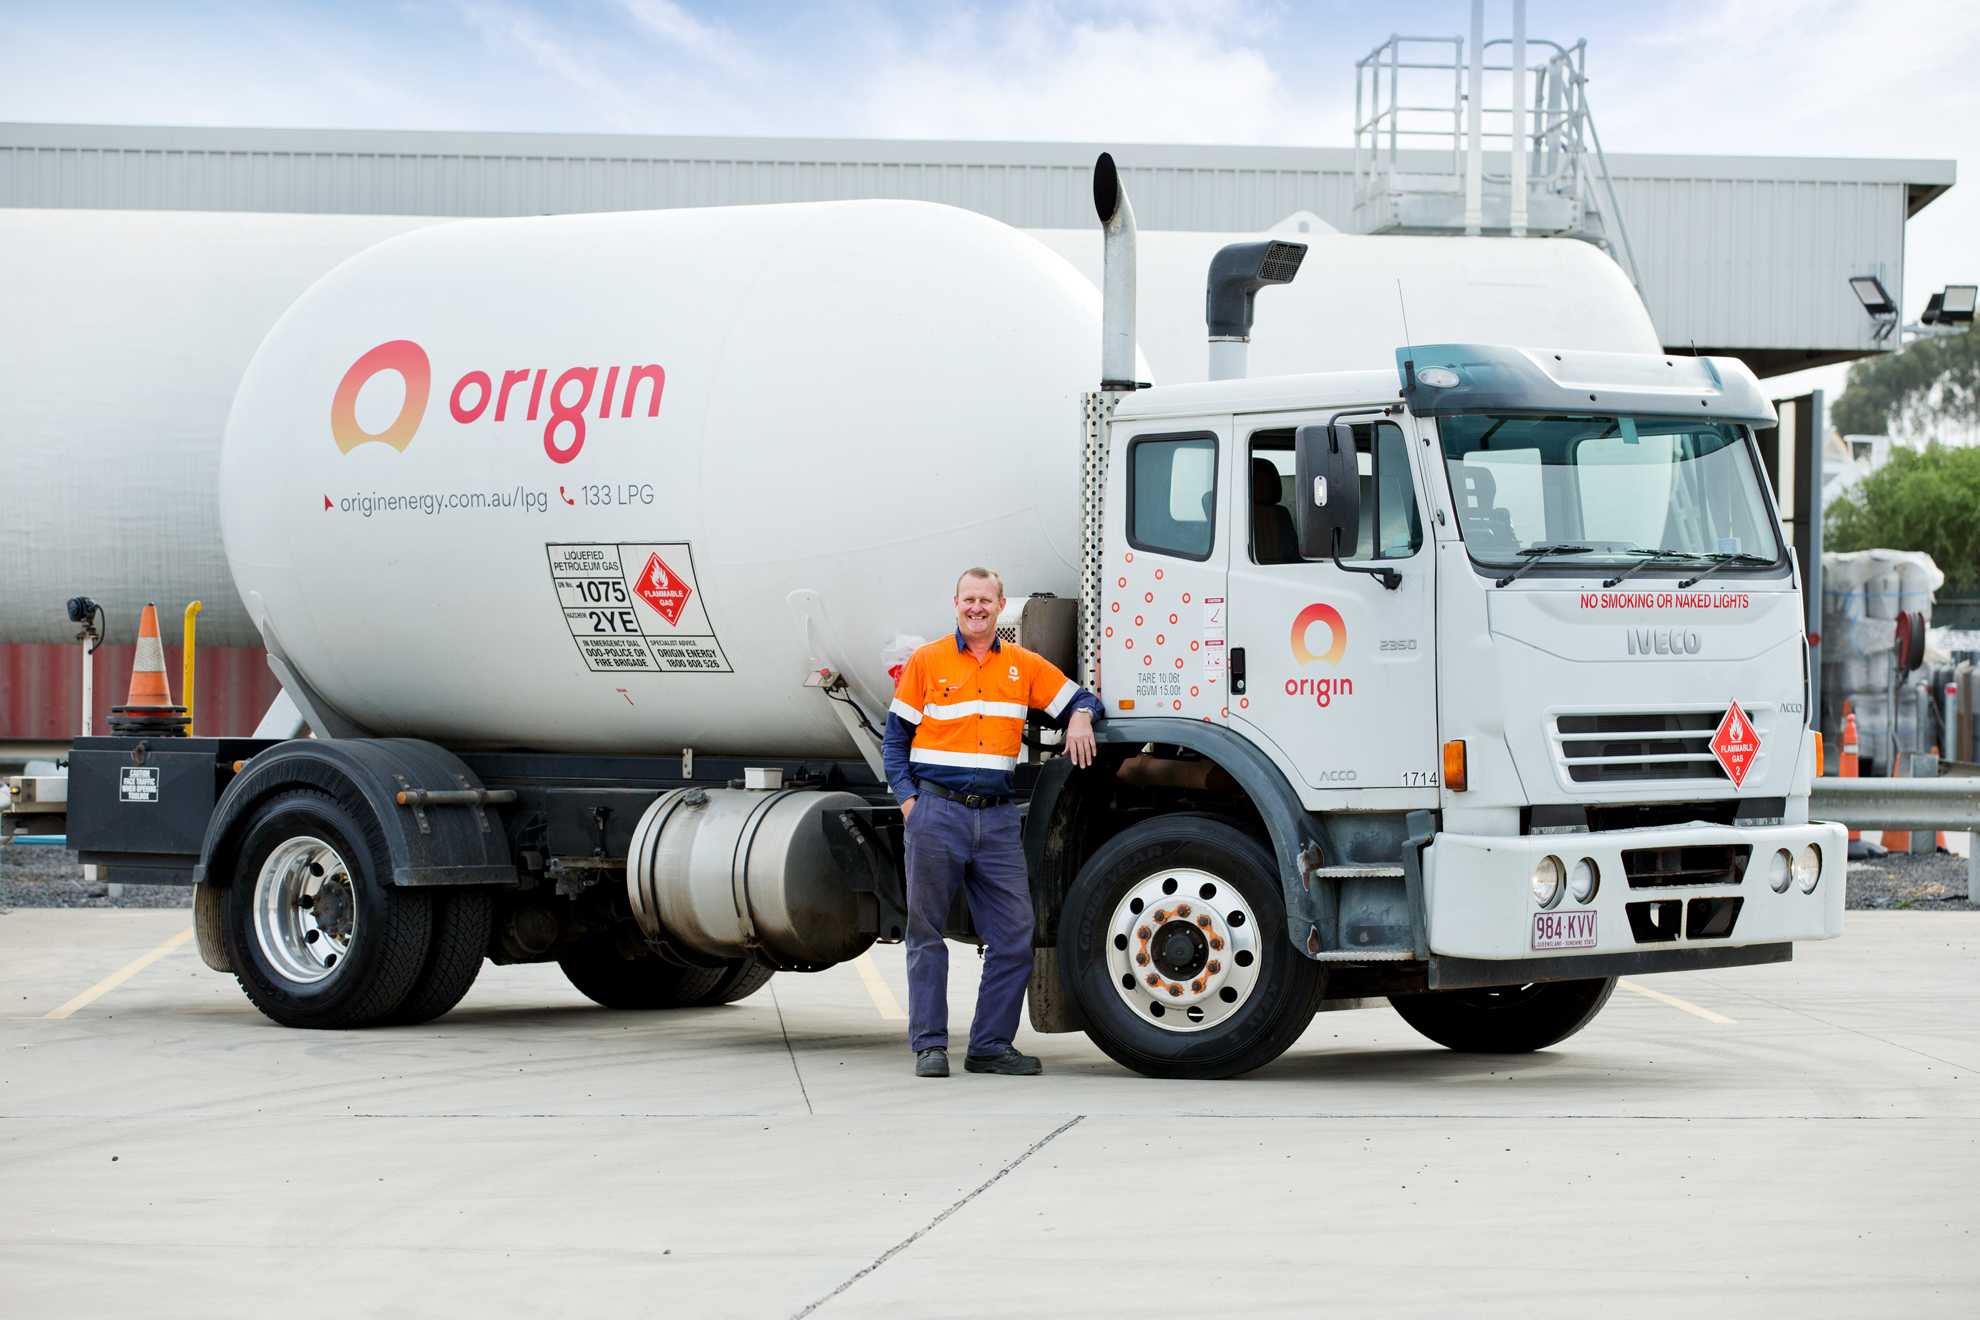 Origin LPG truck with Origin driver for your local LPG supply